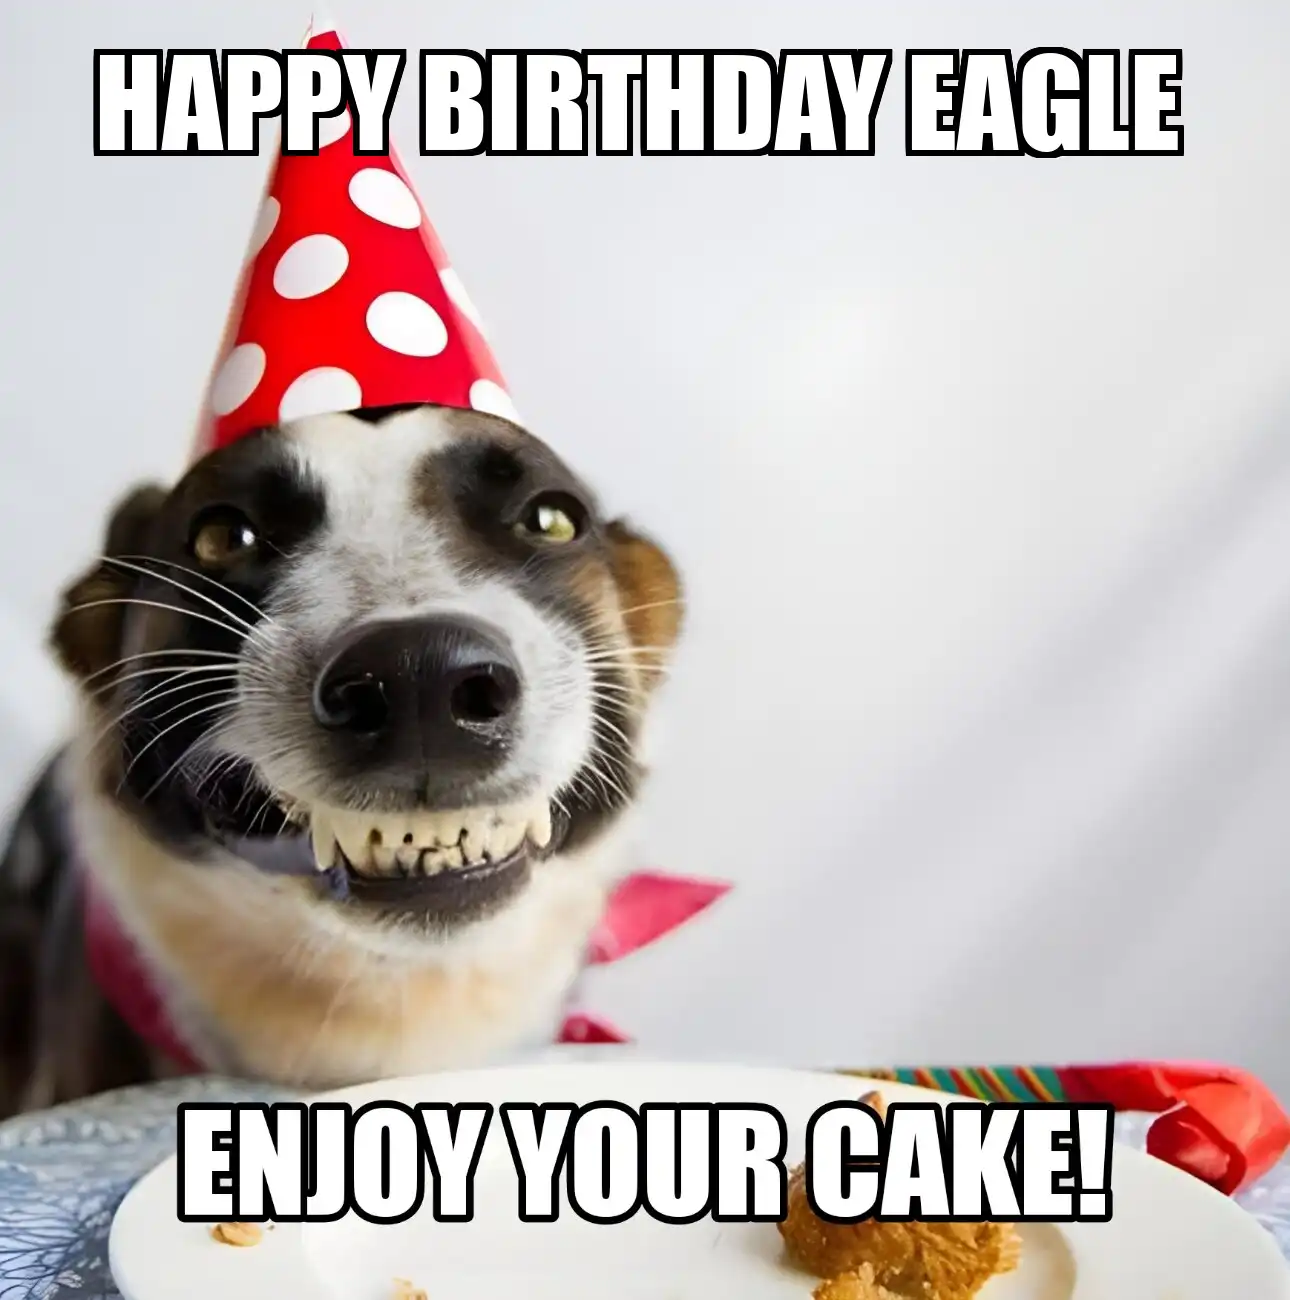 Happy Birthday Eagle Enjoy Your Cake Dog Meme